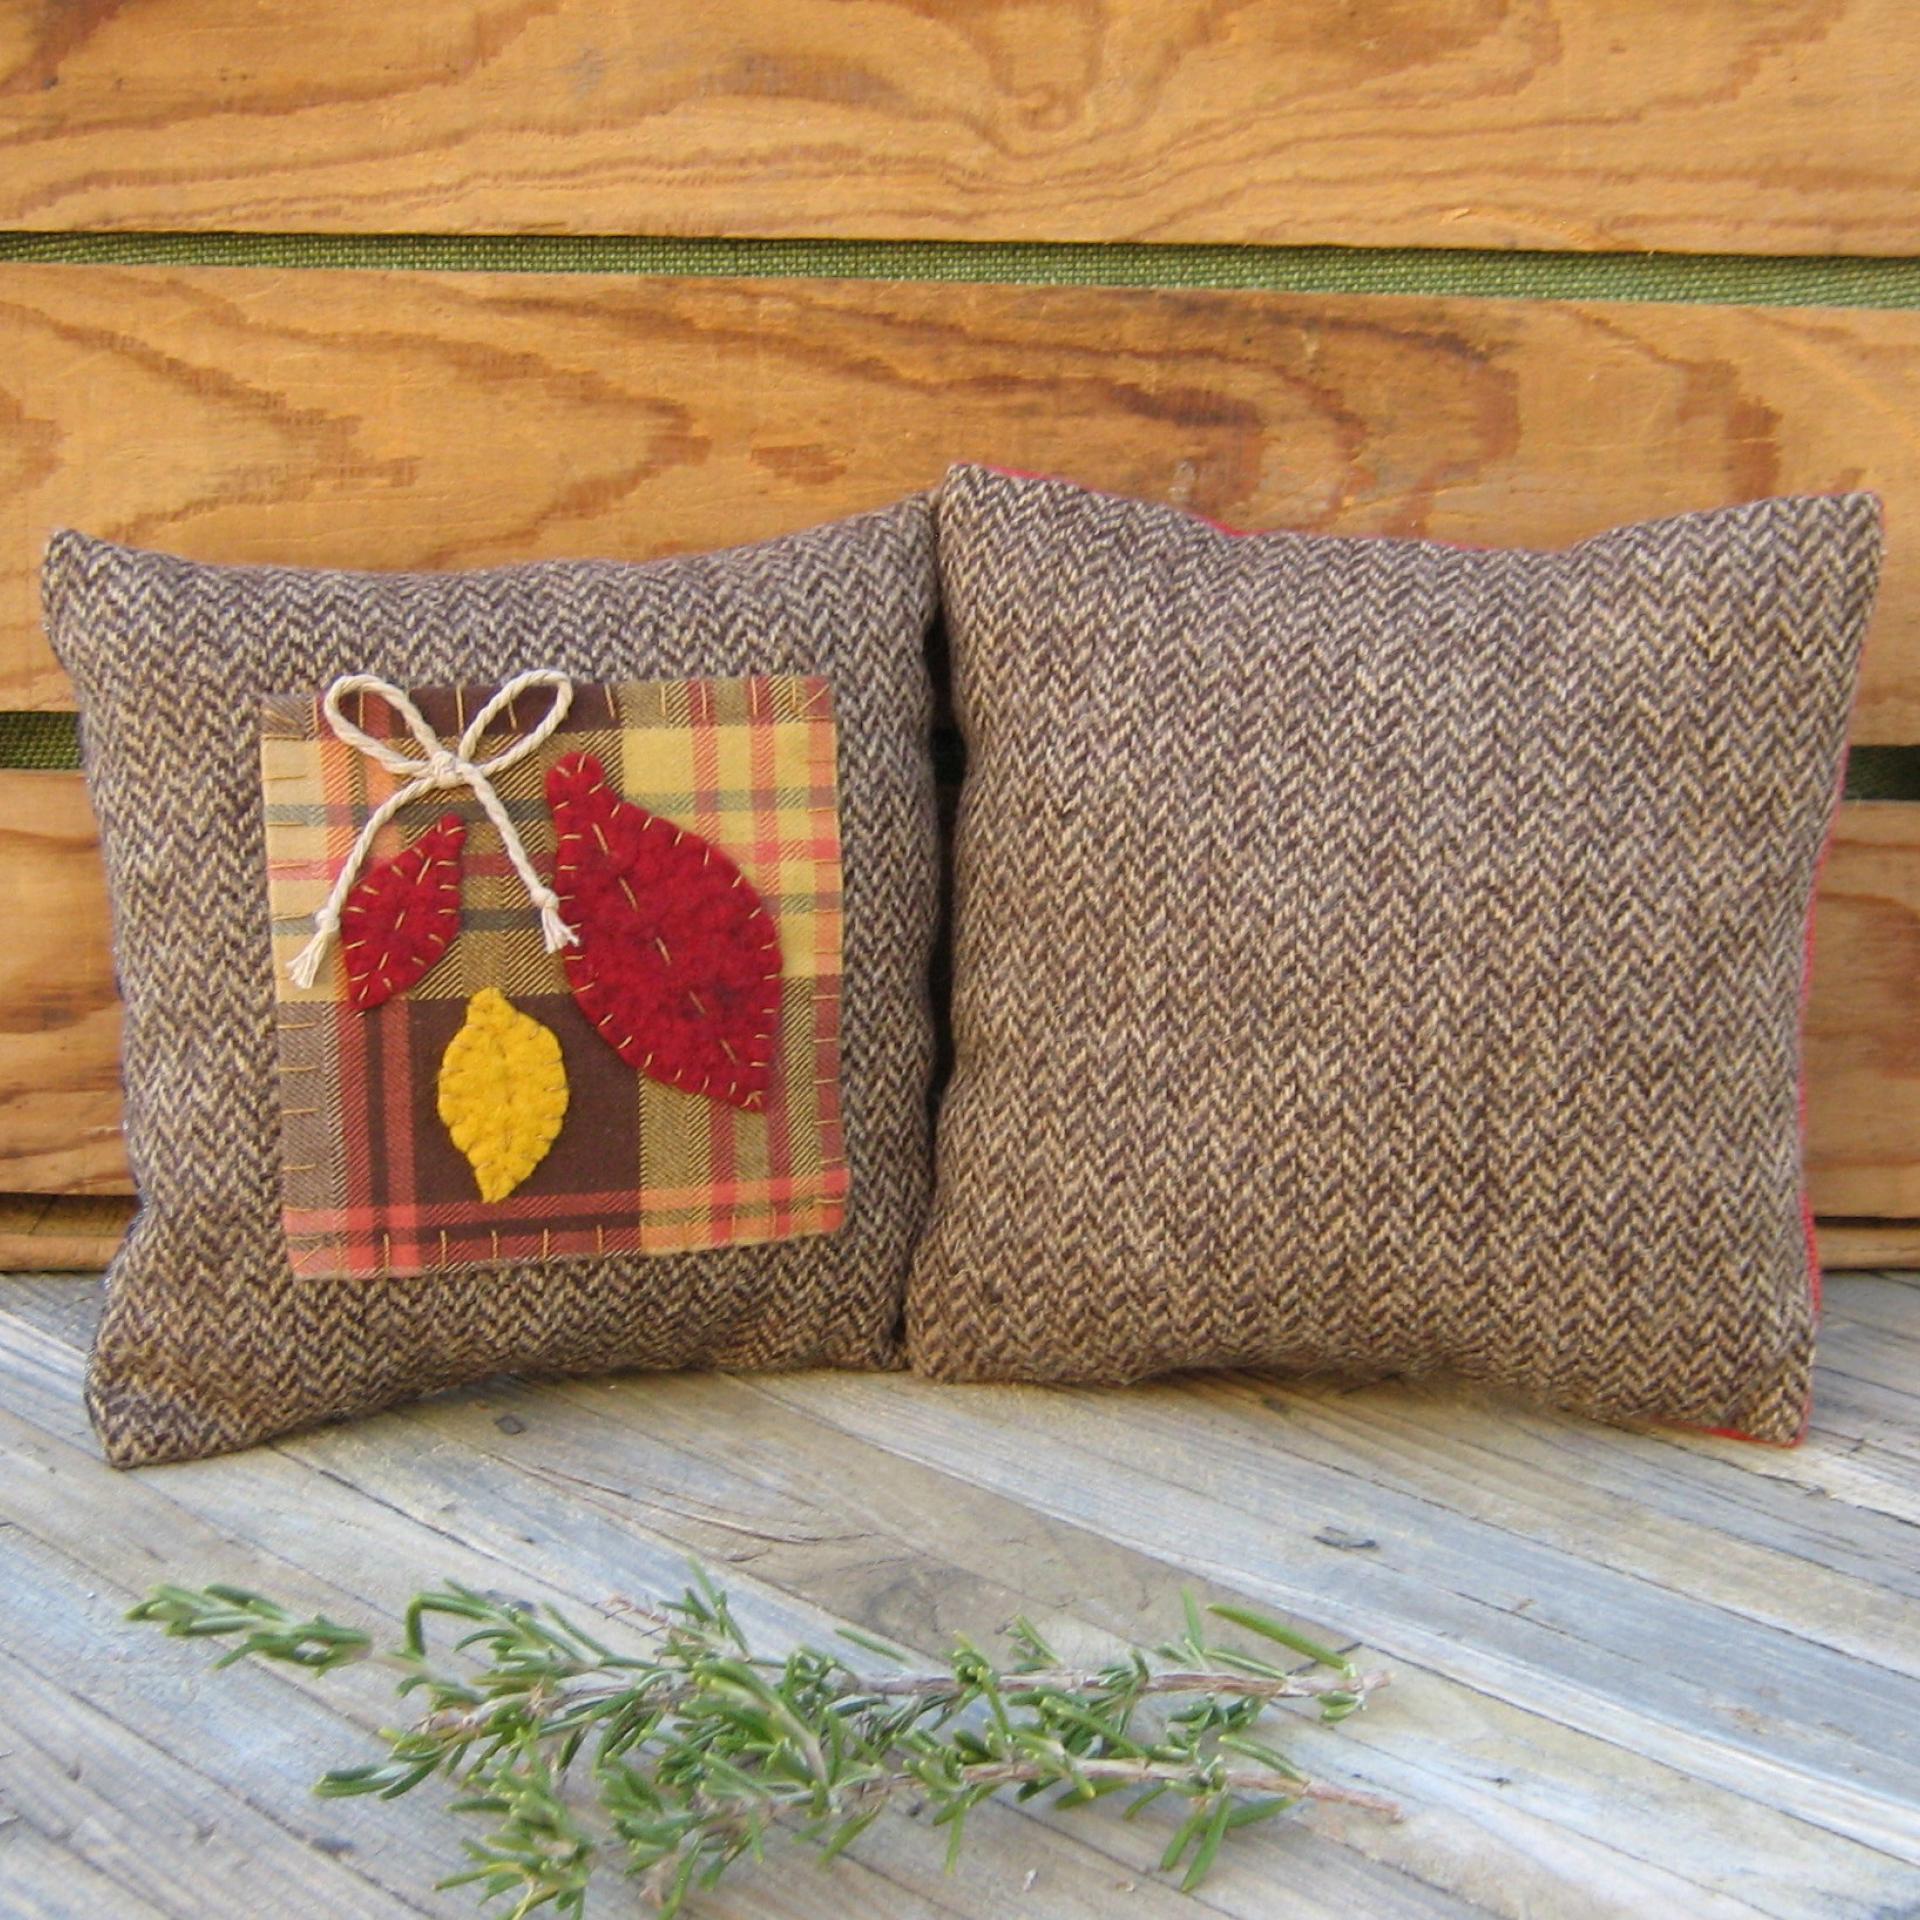 Mini Pillow Set 7" for Fall Décor, Autumn Mantel Decoration, Centerpiece for Fall Table, Seasonal Photo Props, USA Made